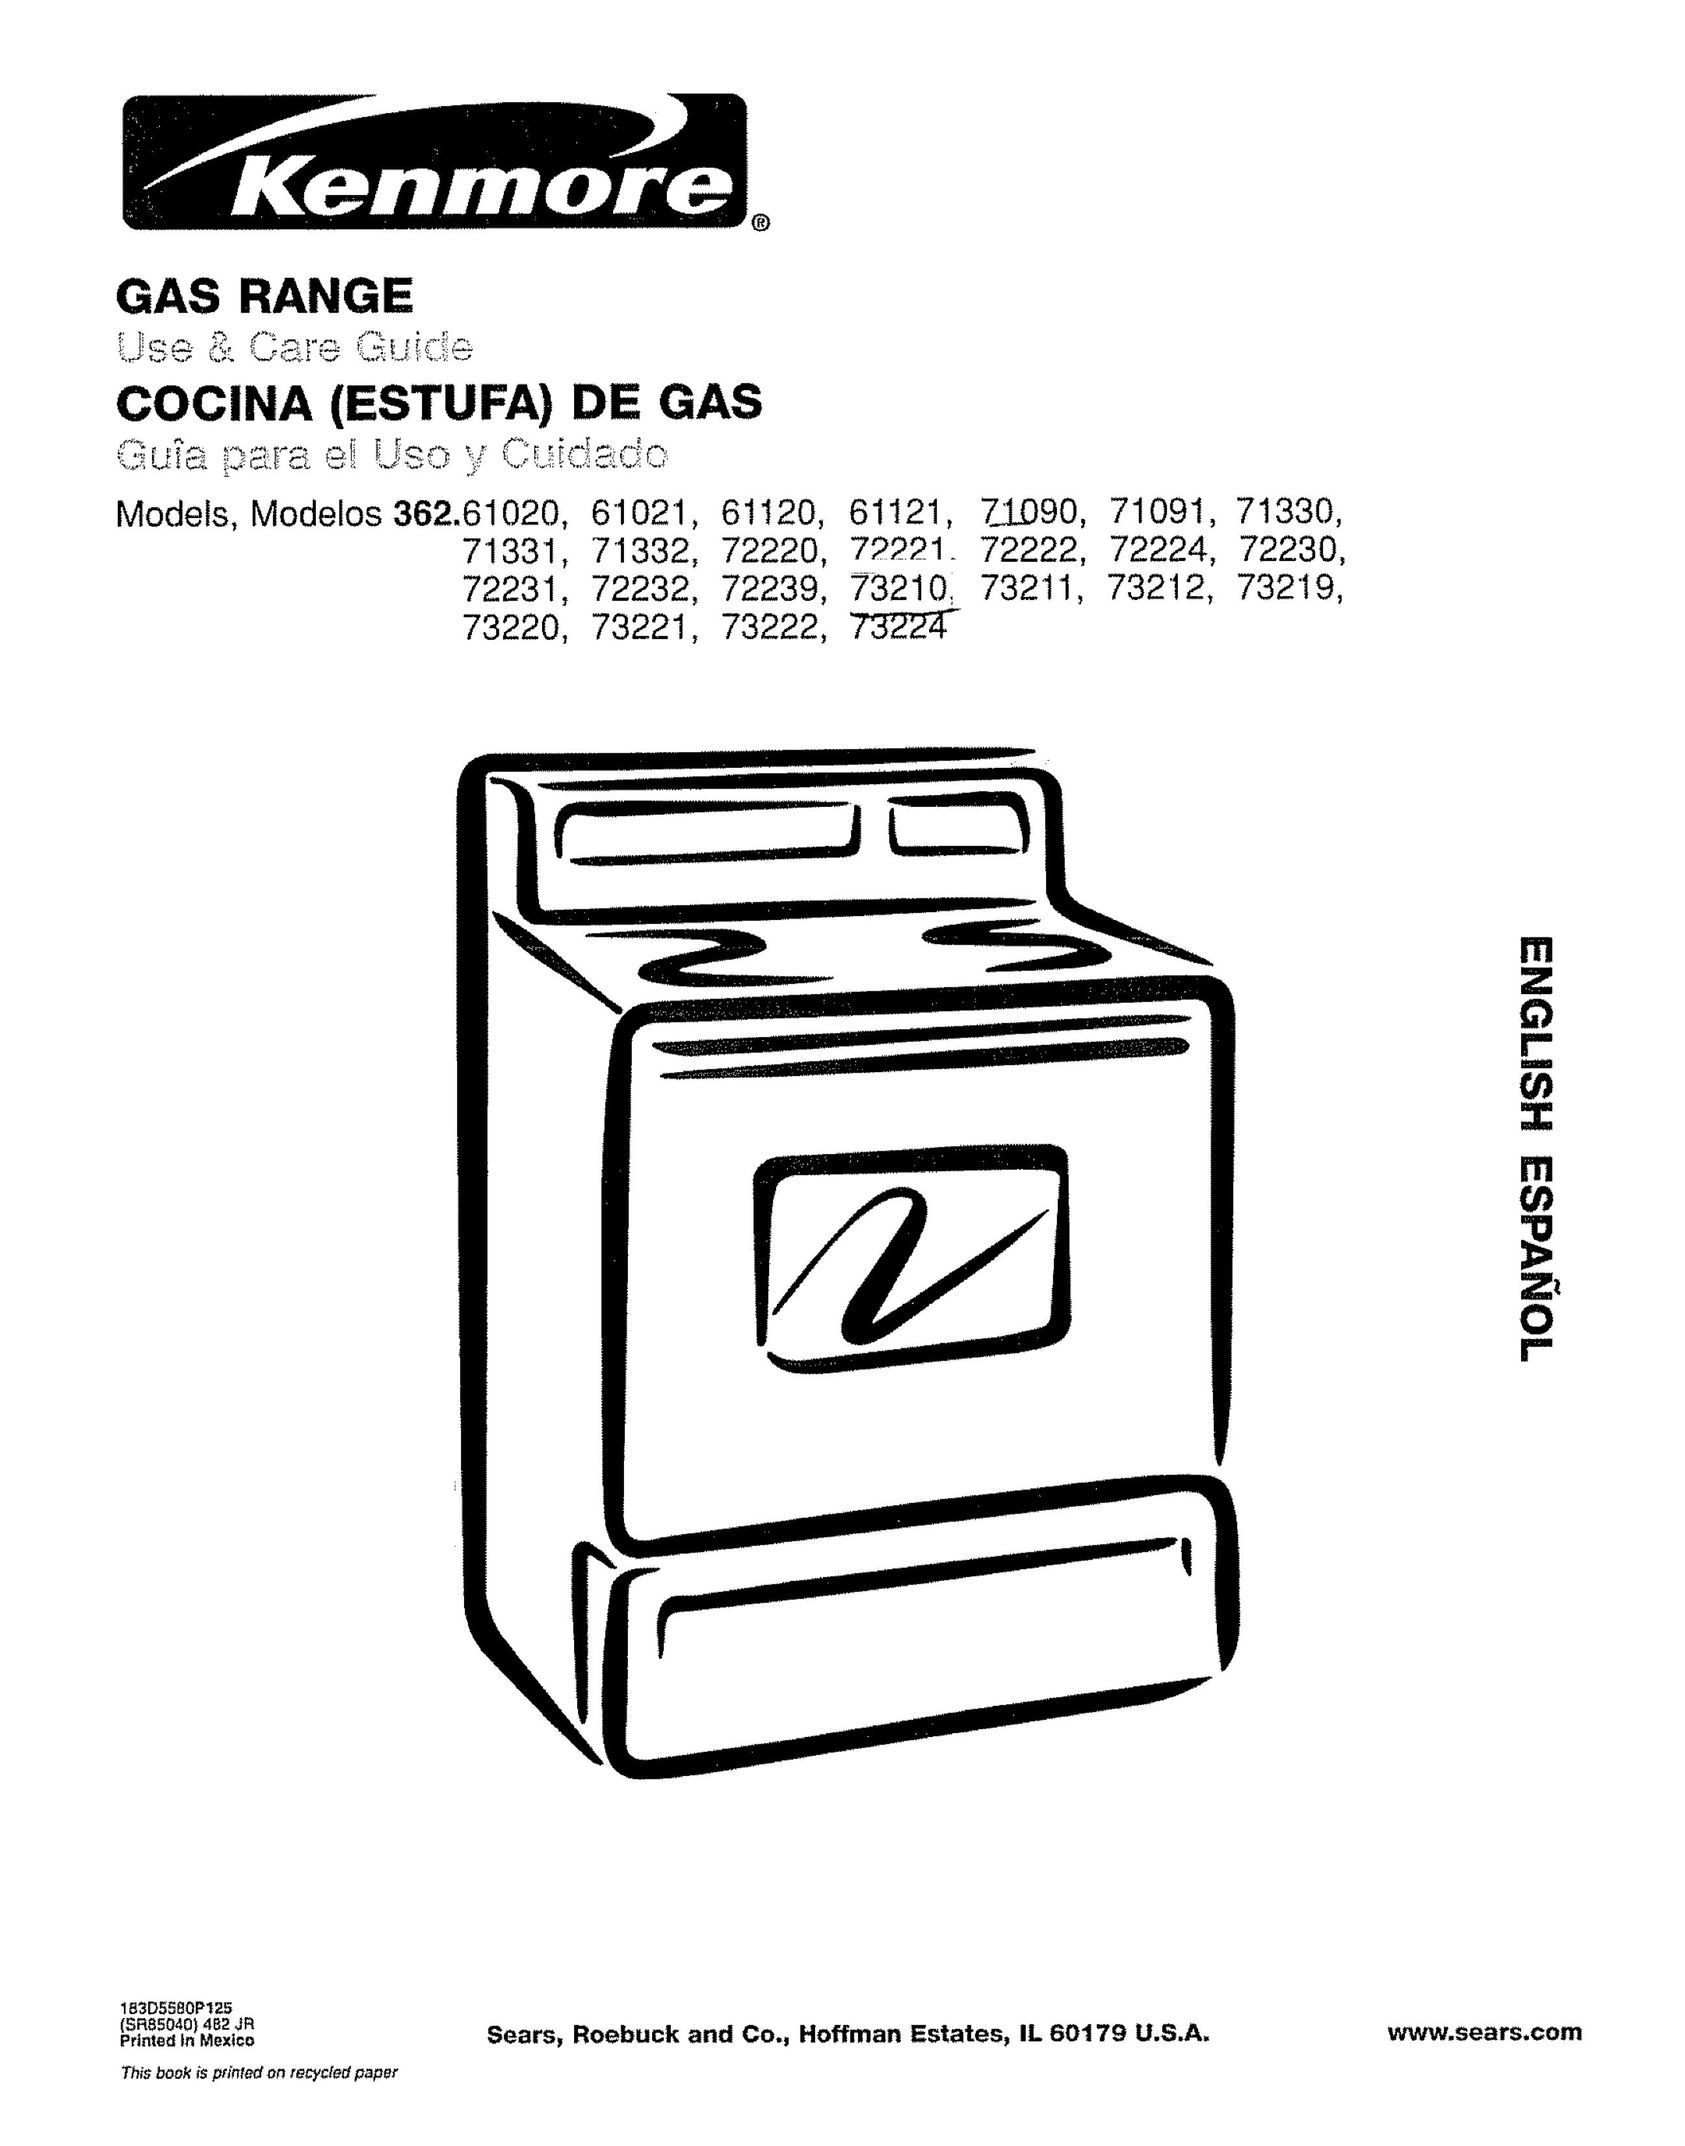 Kenmore 362.71090 Range User Manual